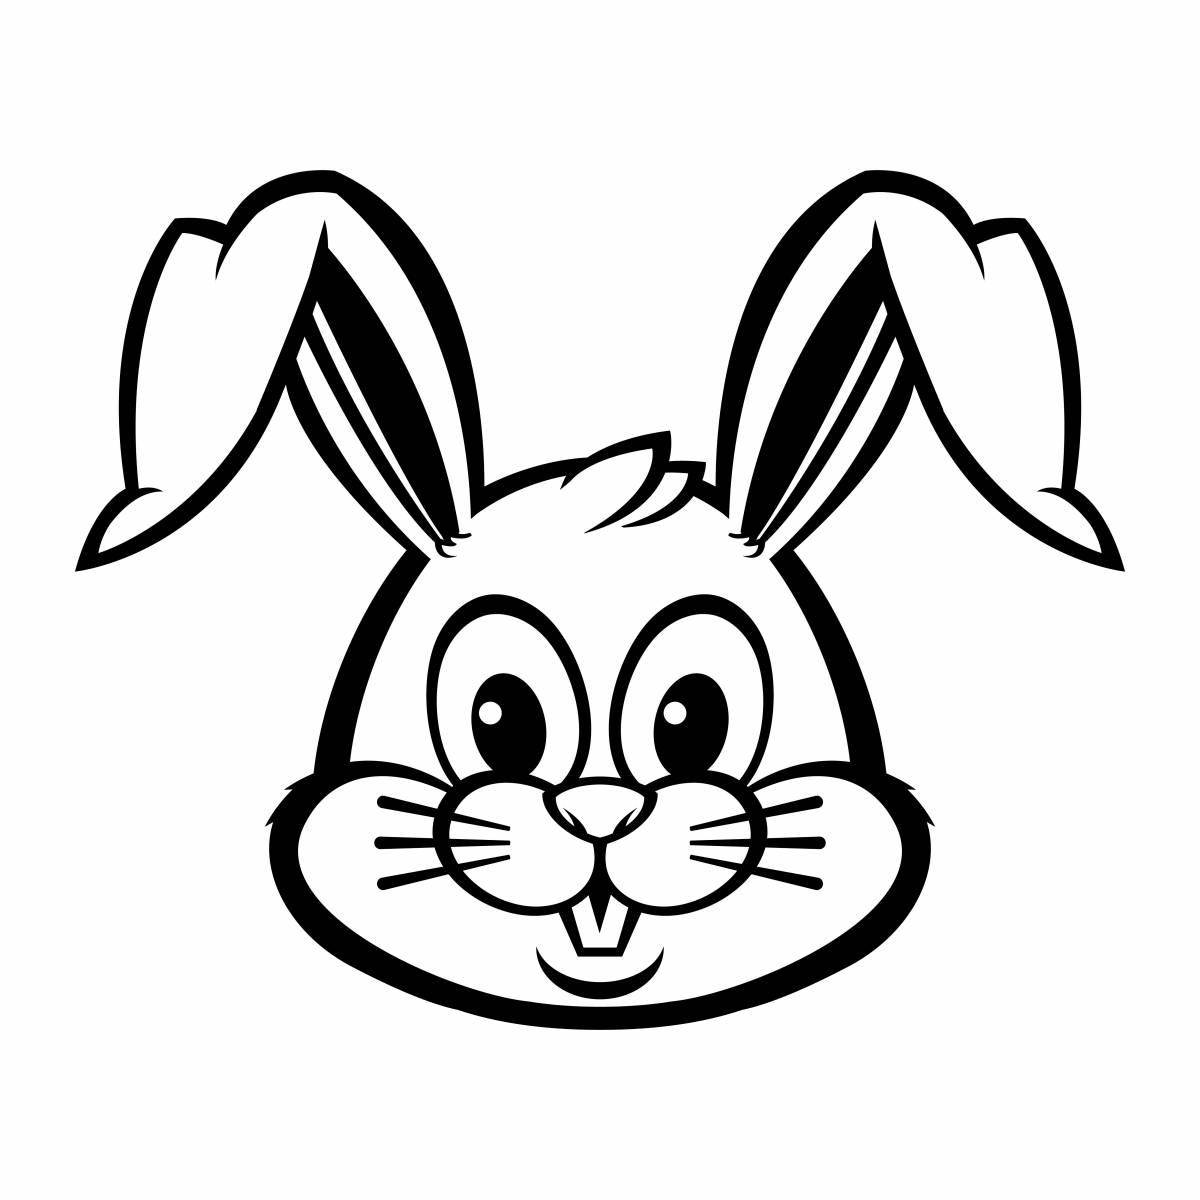 Naughty rabbit head coloring book